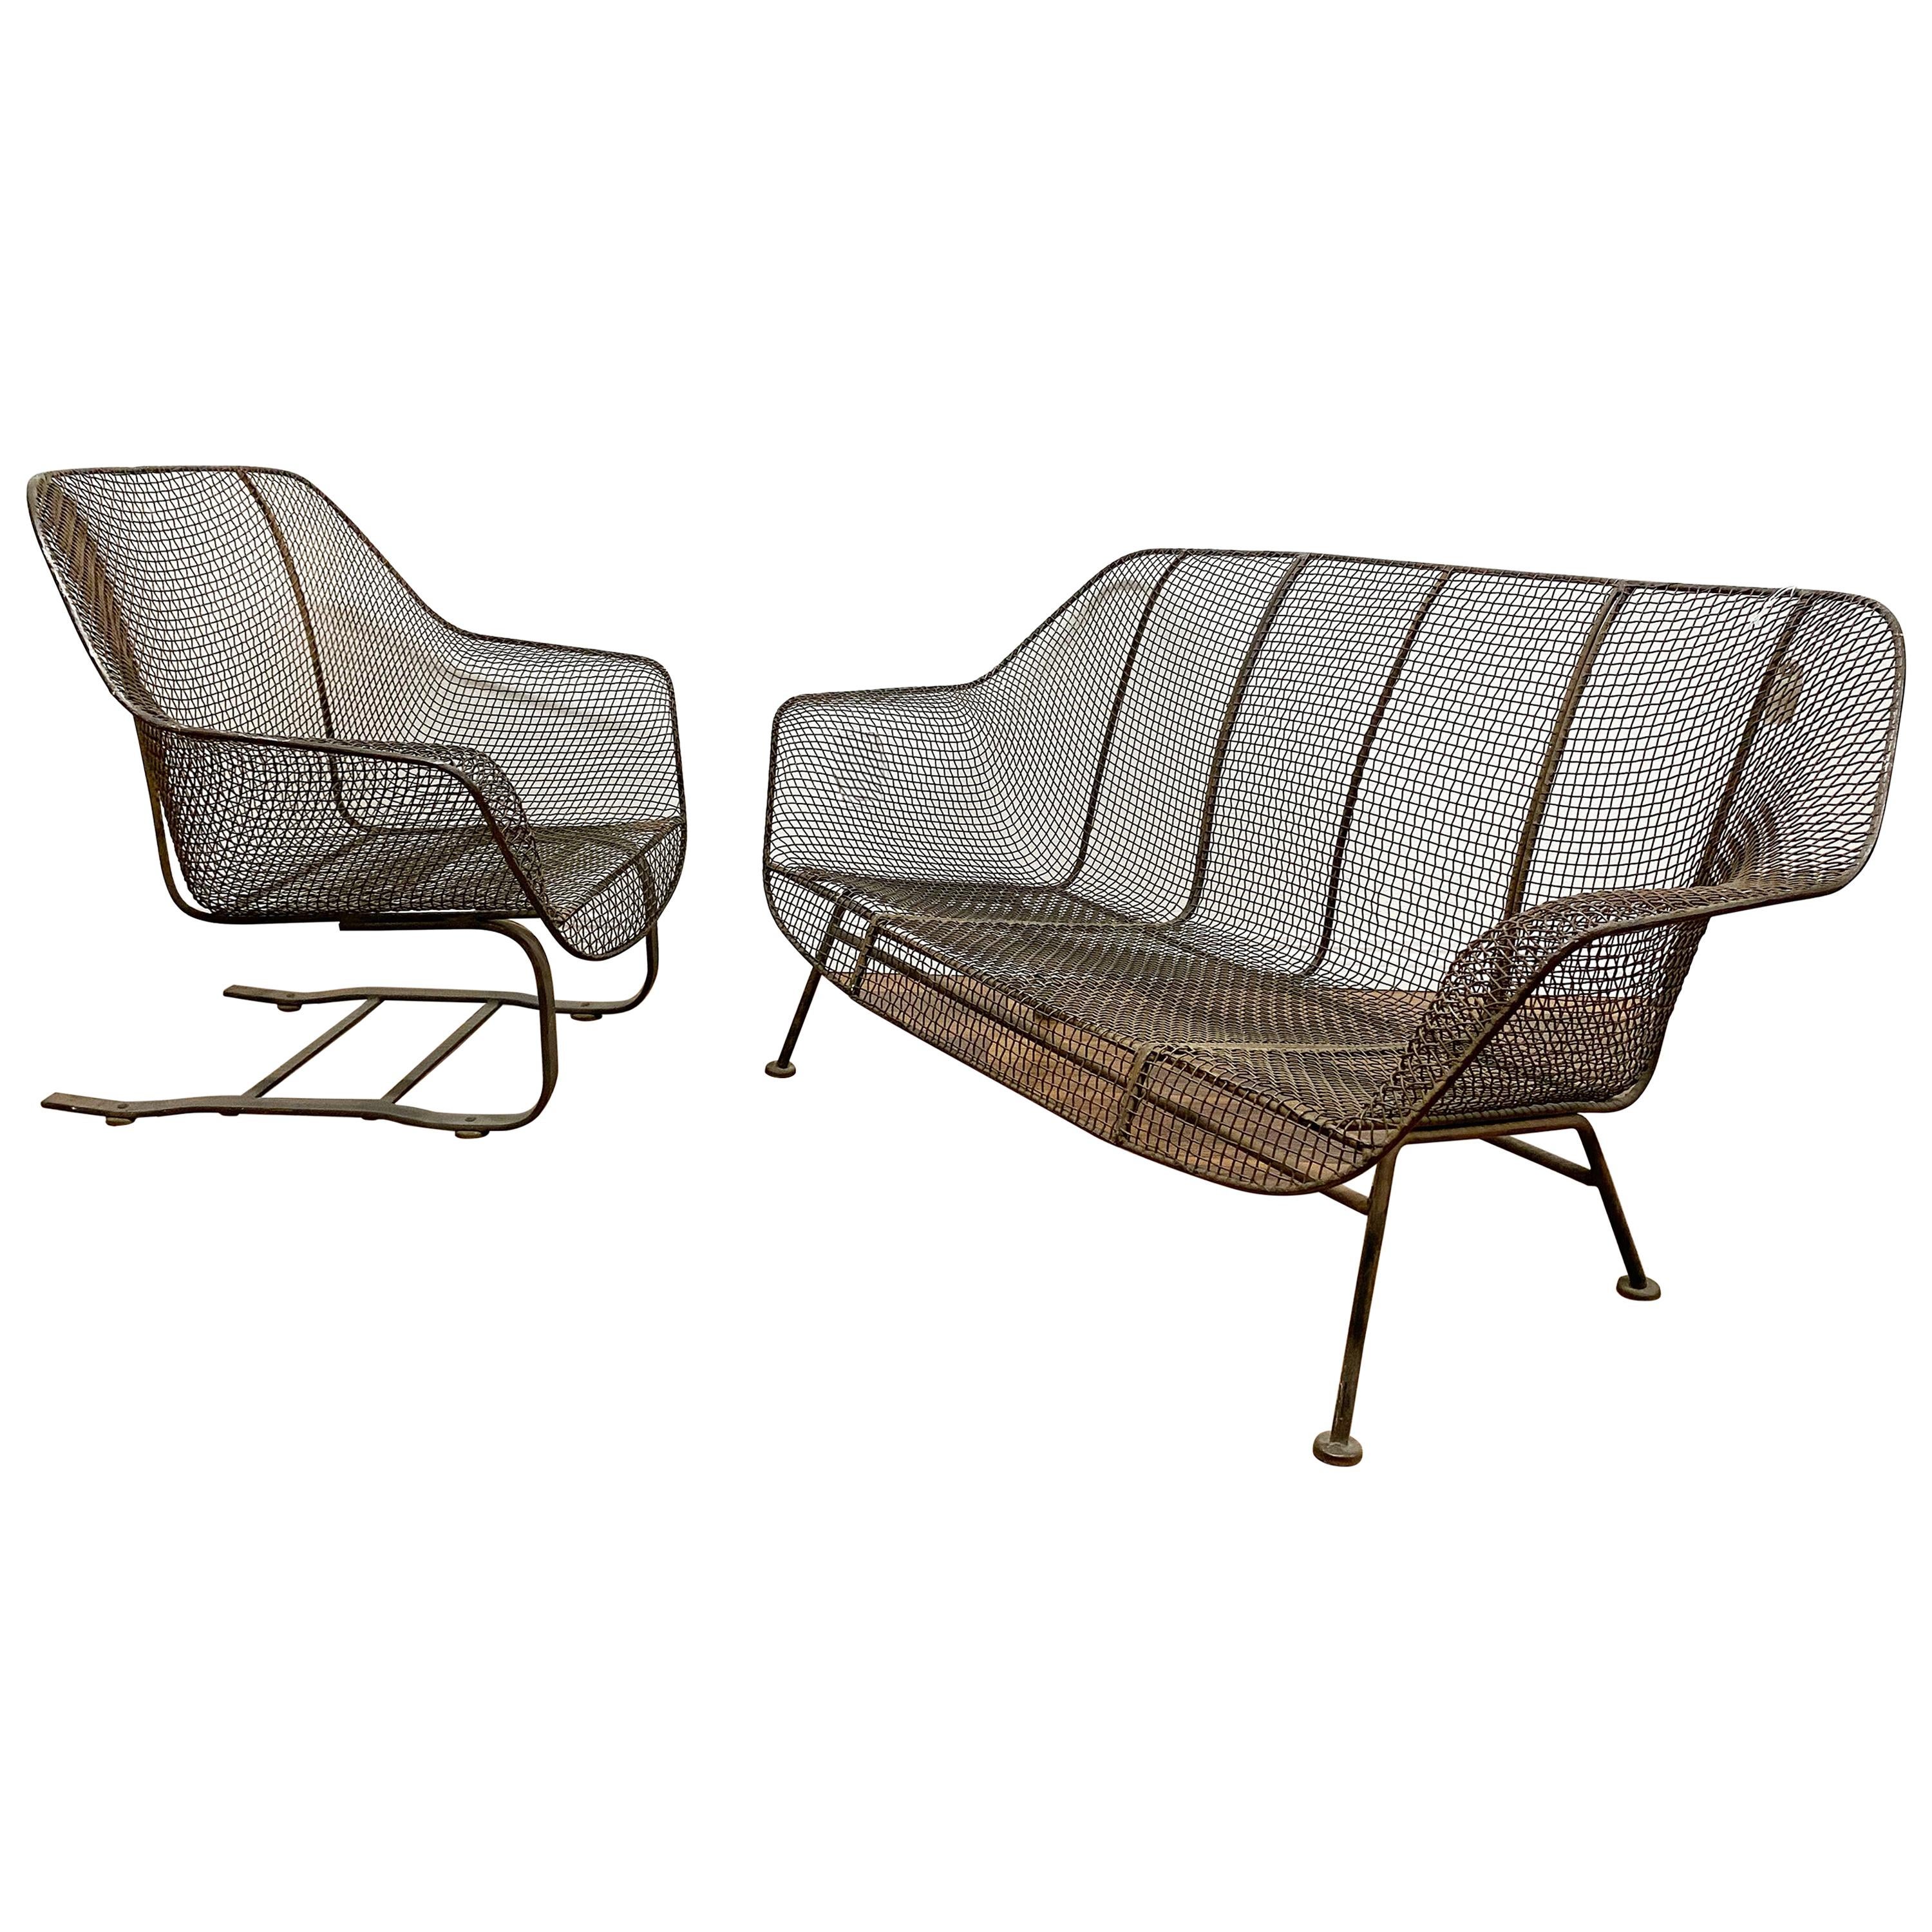 Original Russell Woodard "Sculptura" Settee and Cantilevered Lounge Chair